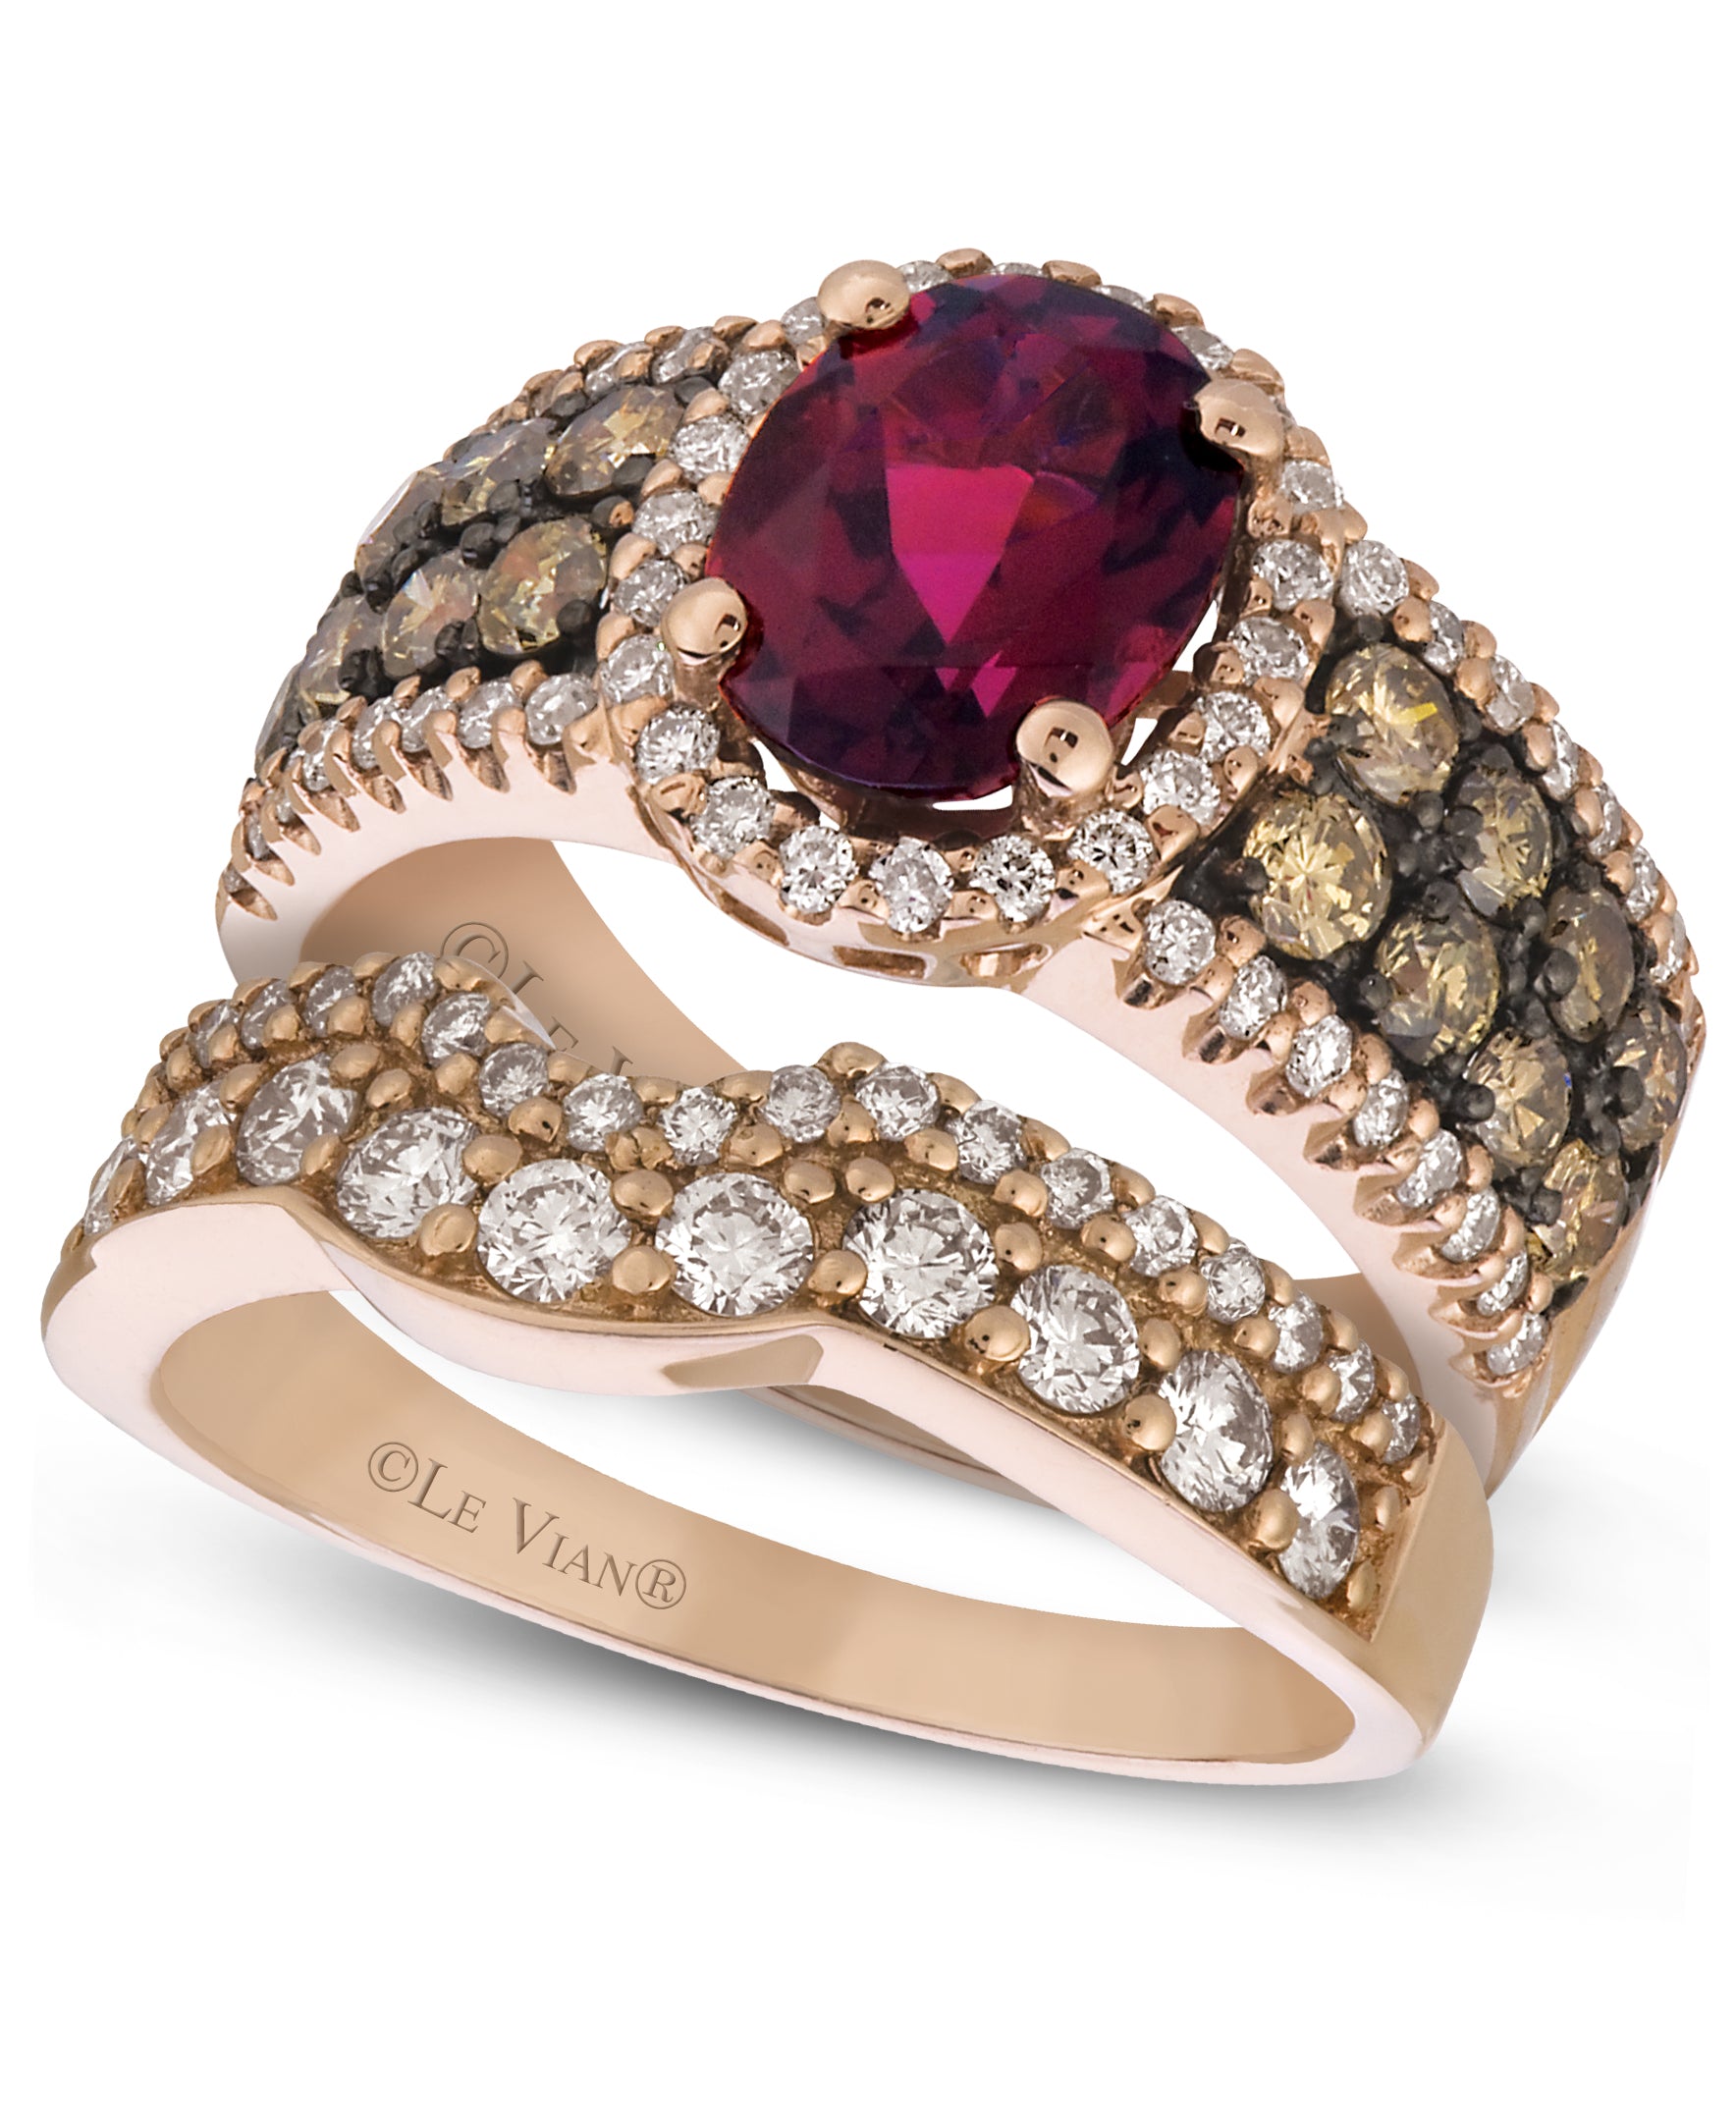 Le Vian Chocolatier Ring featuring Raspberry Rhodolite Chocolate Diamonds, Vanilla Diamonds set in 14K Rose Gold